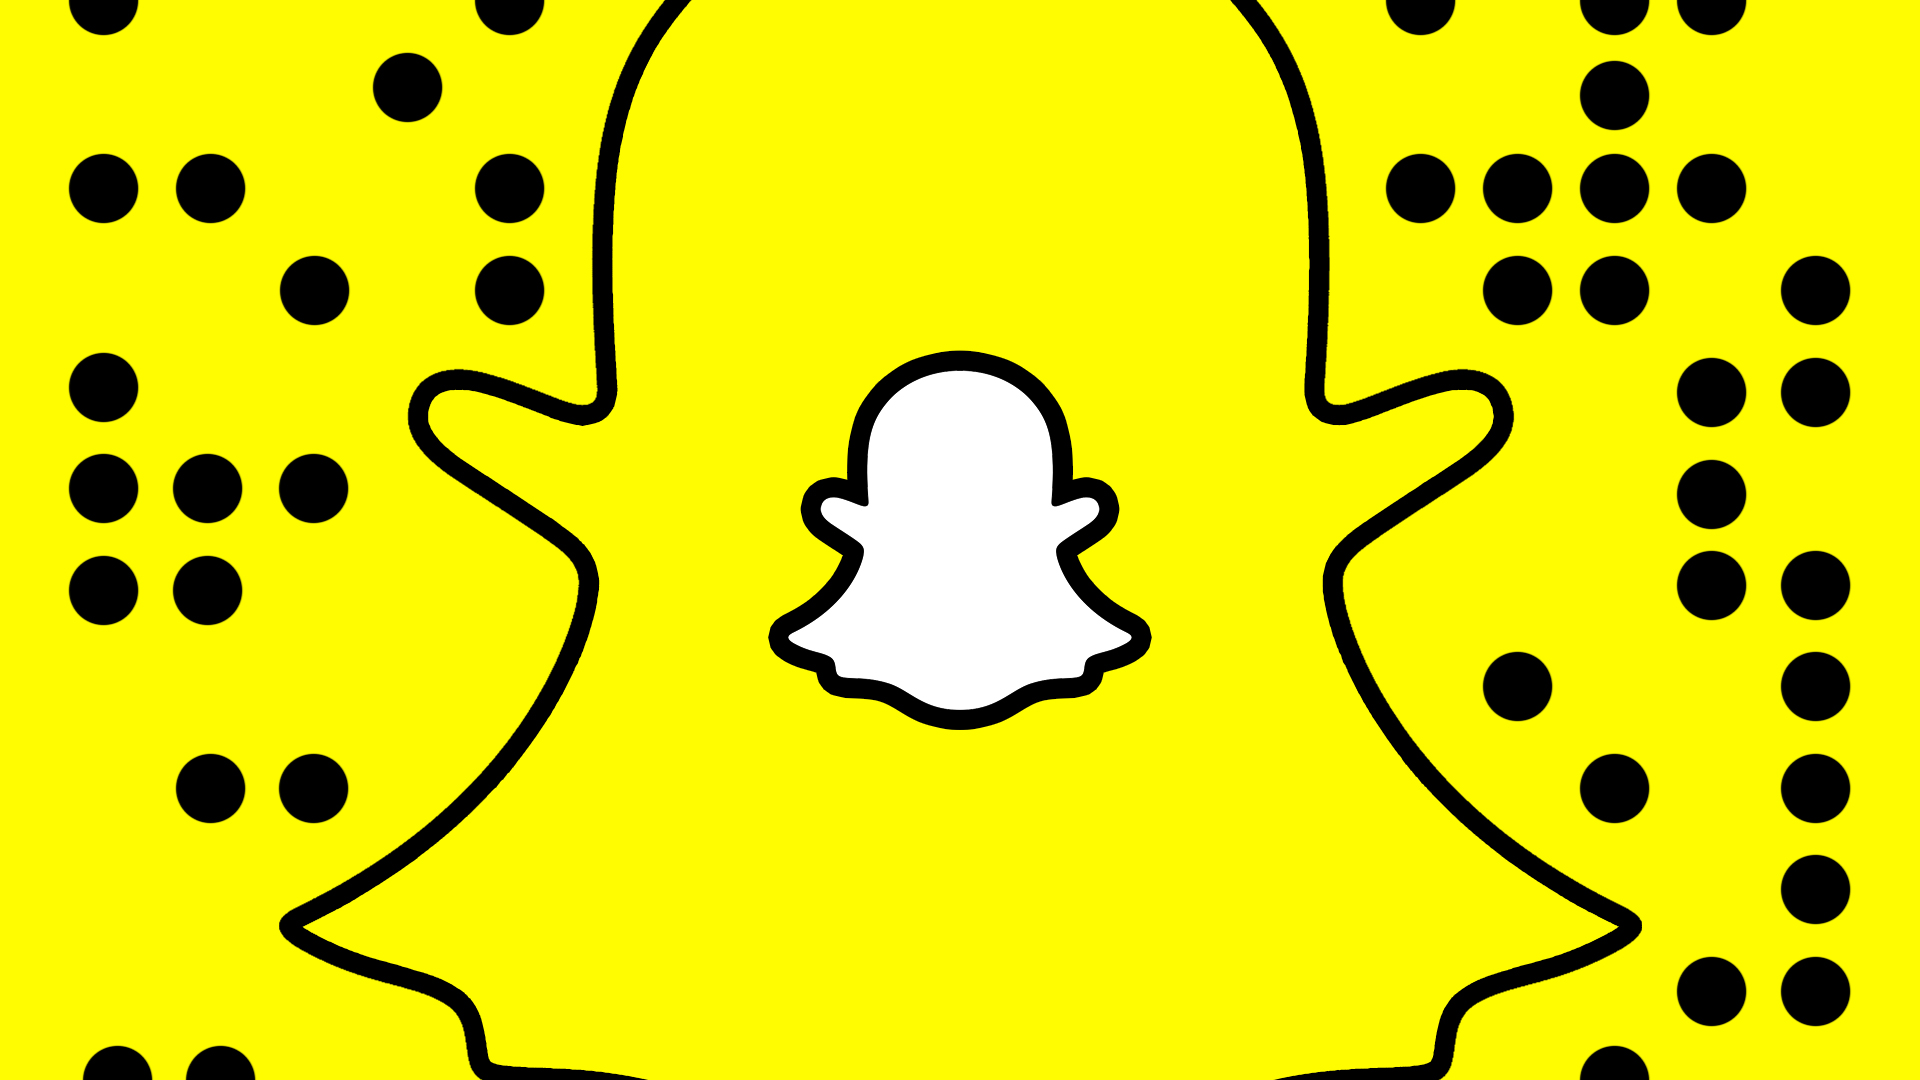 miniaturka z logiem Snapchat